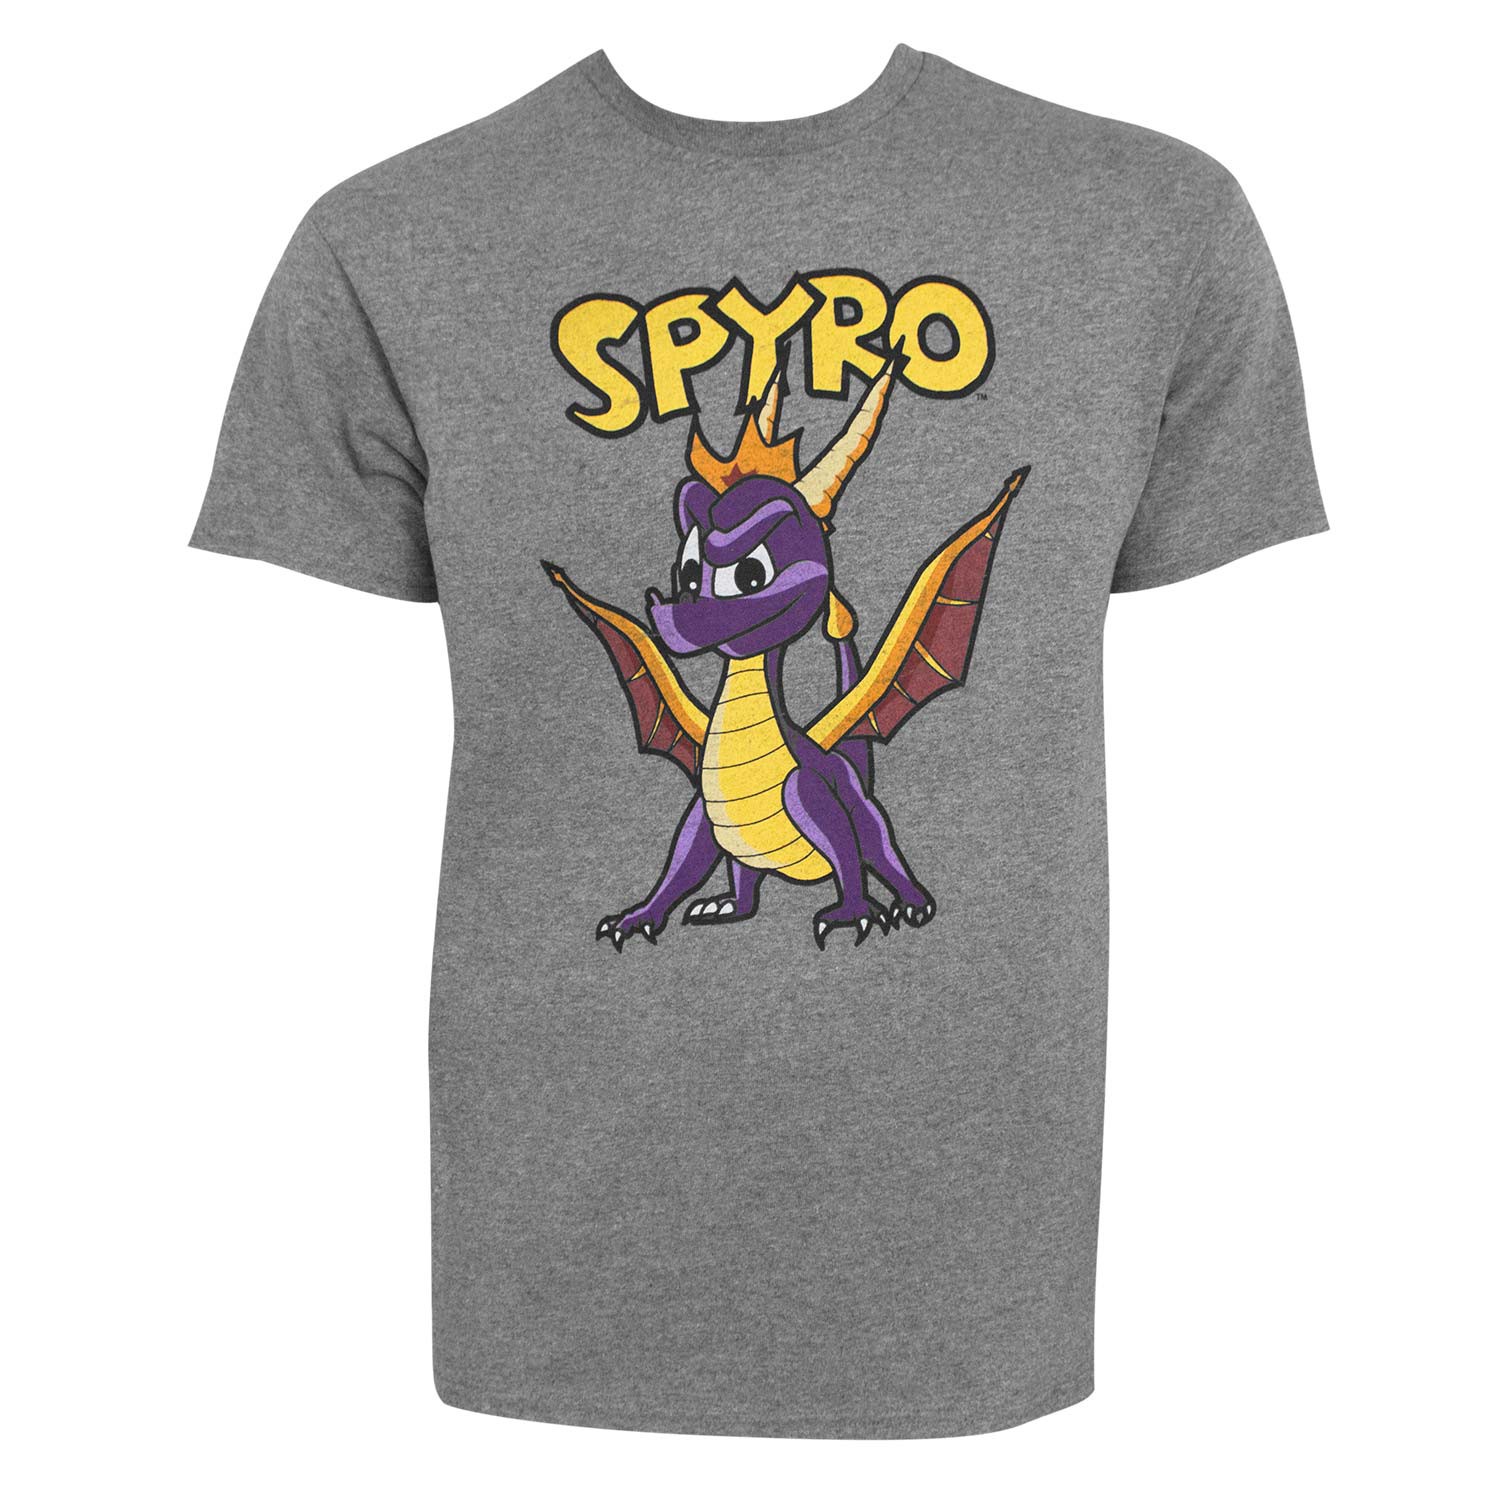 Spyro The Dragon Character Men's Grey T-Shirt